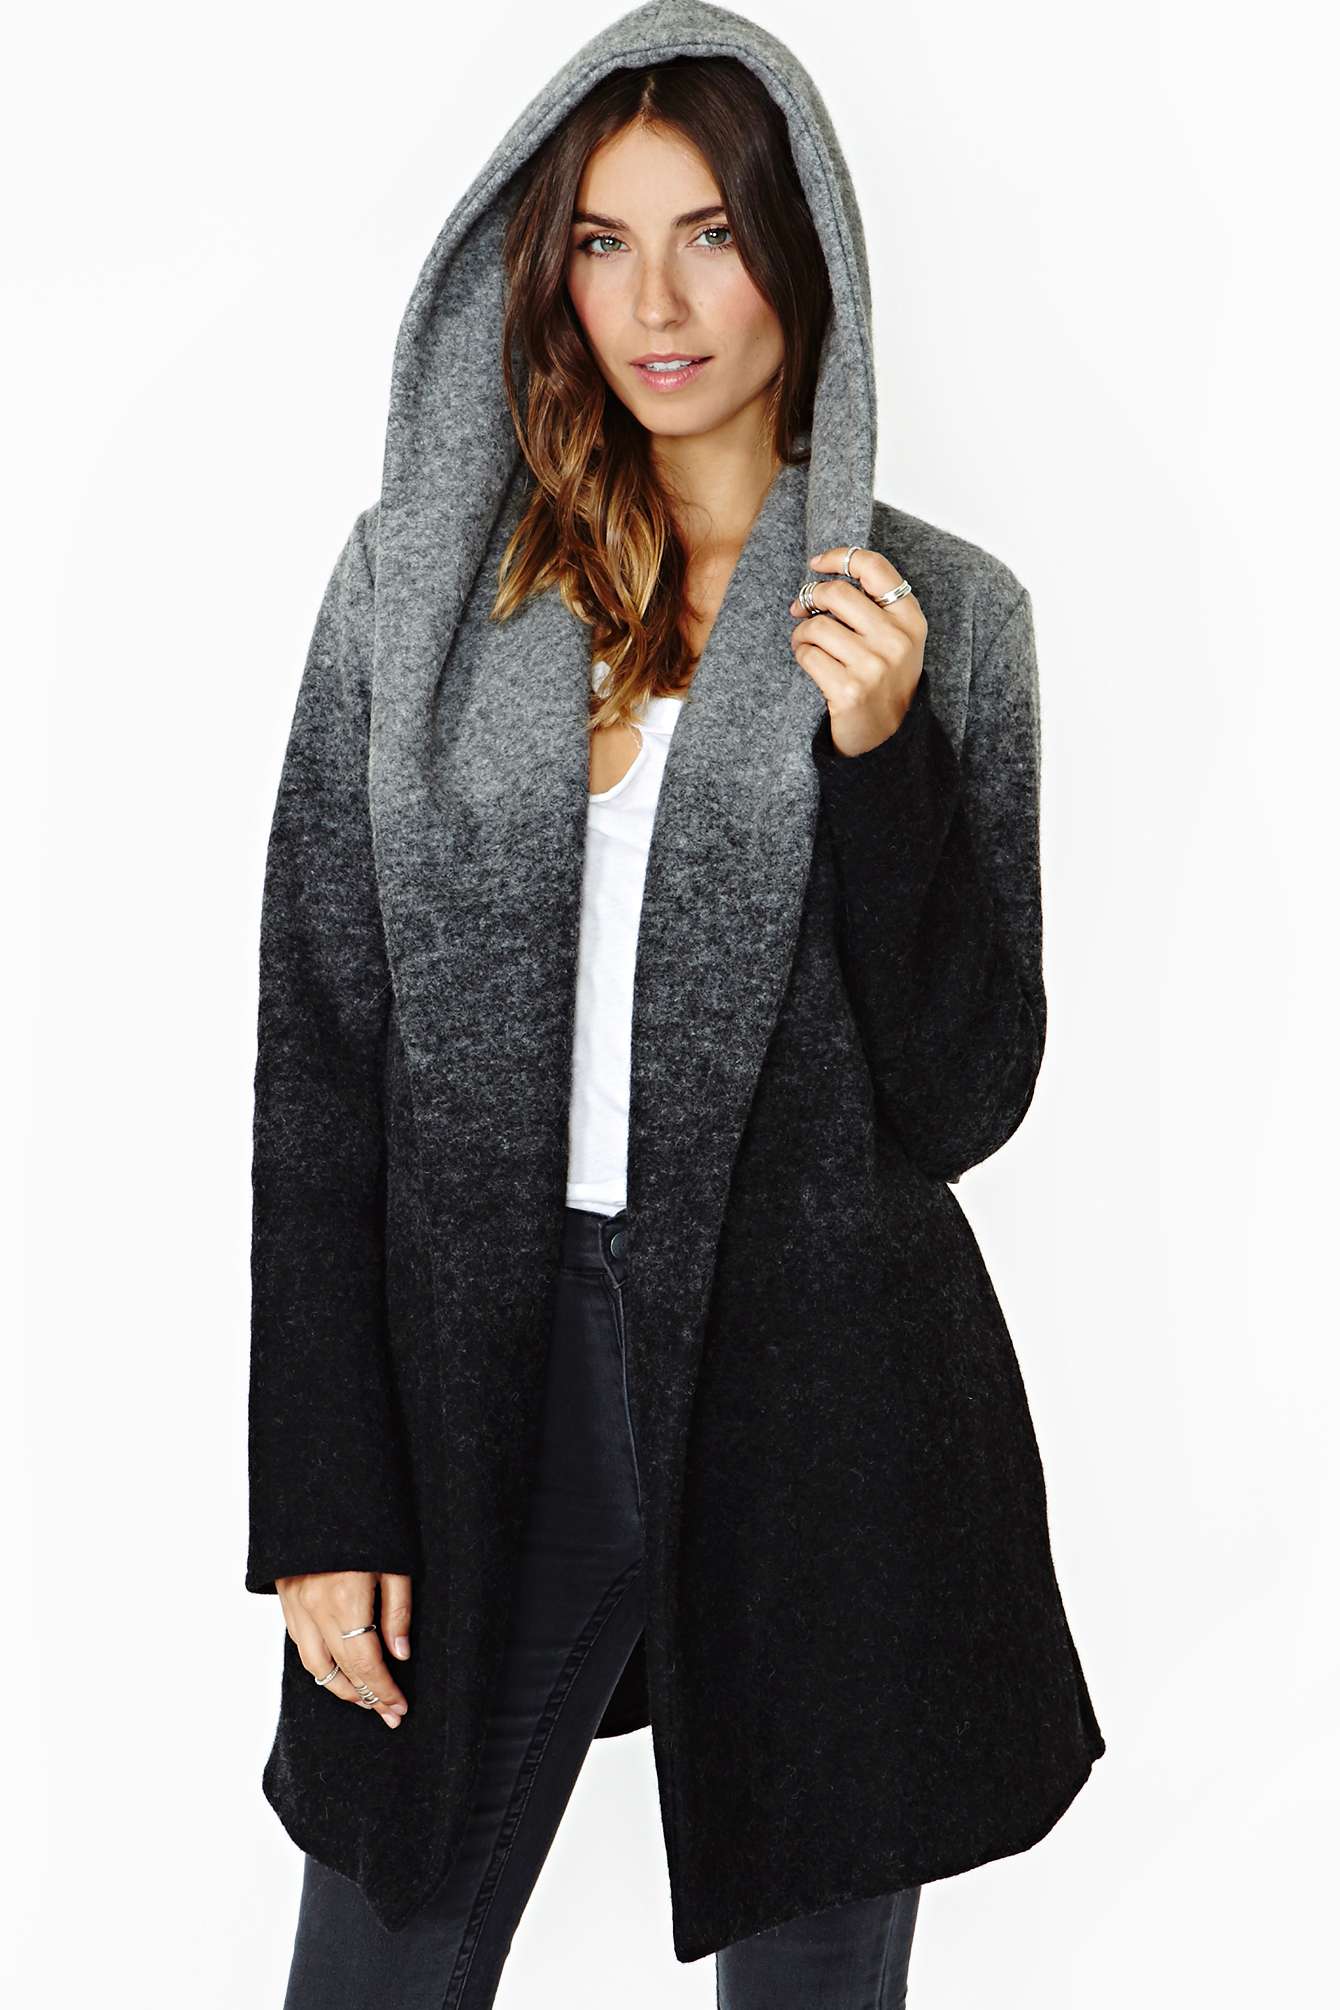 Lyst - Nasty Gal Bb Dakota Ombre Hooded Coat in Black